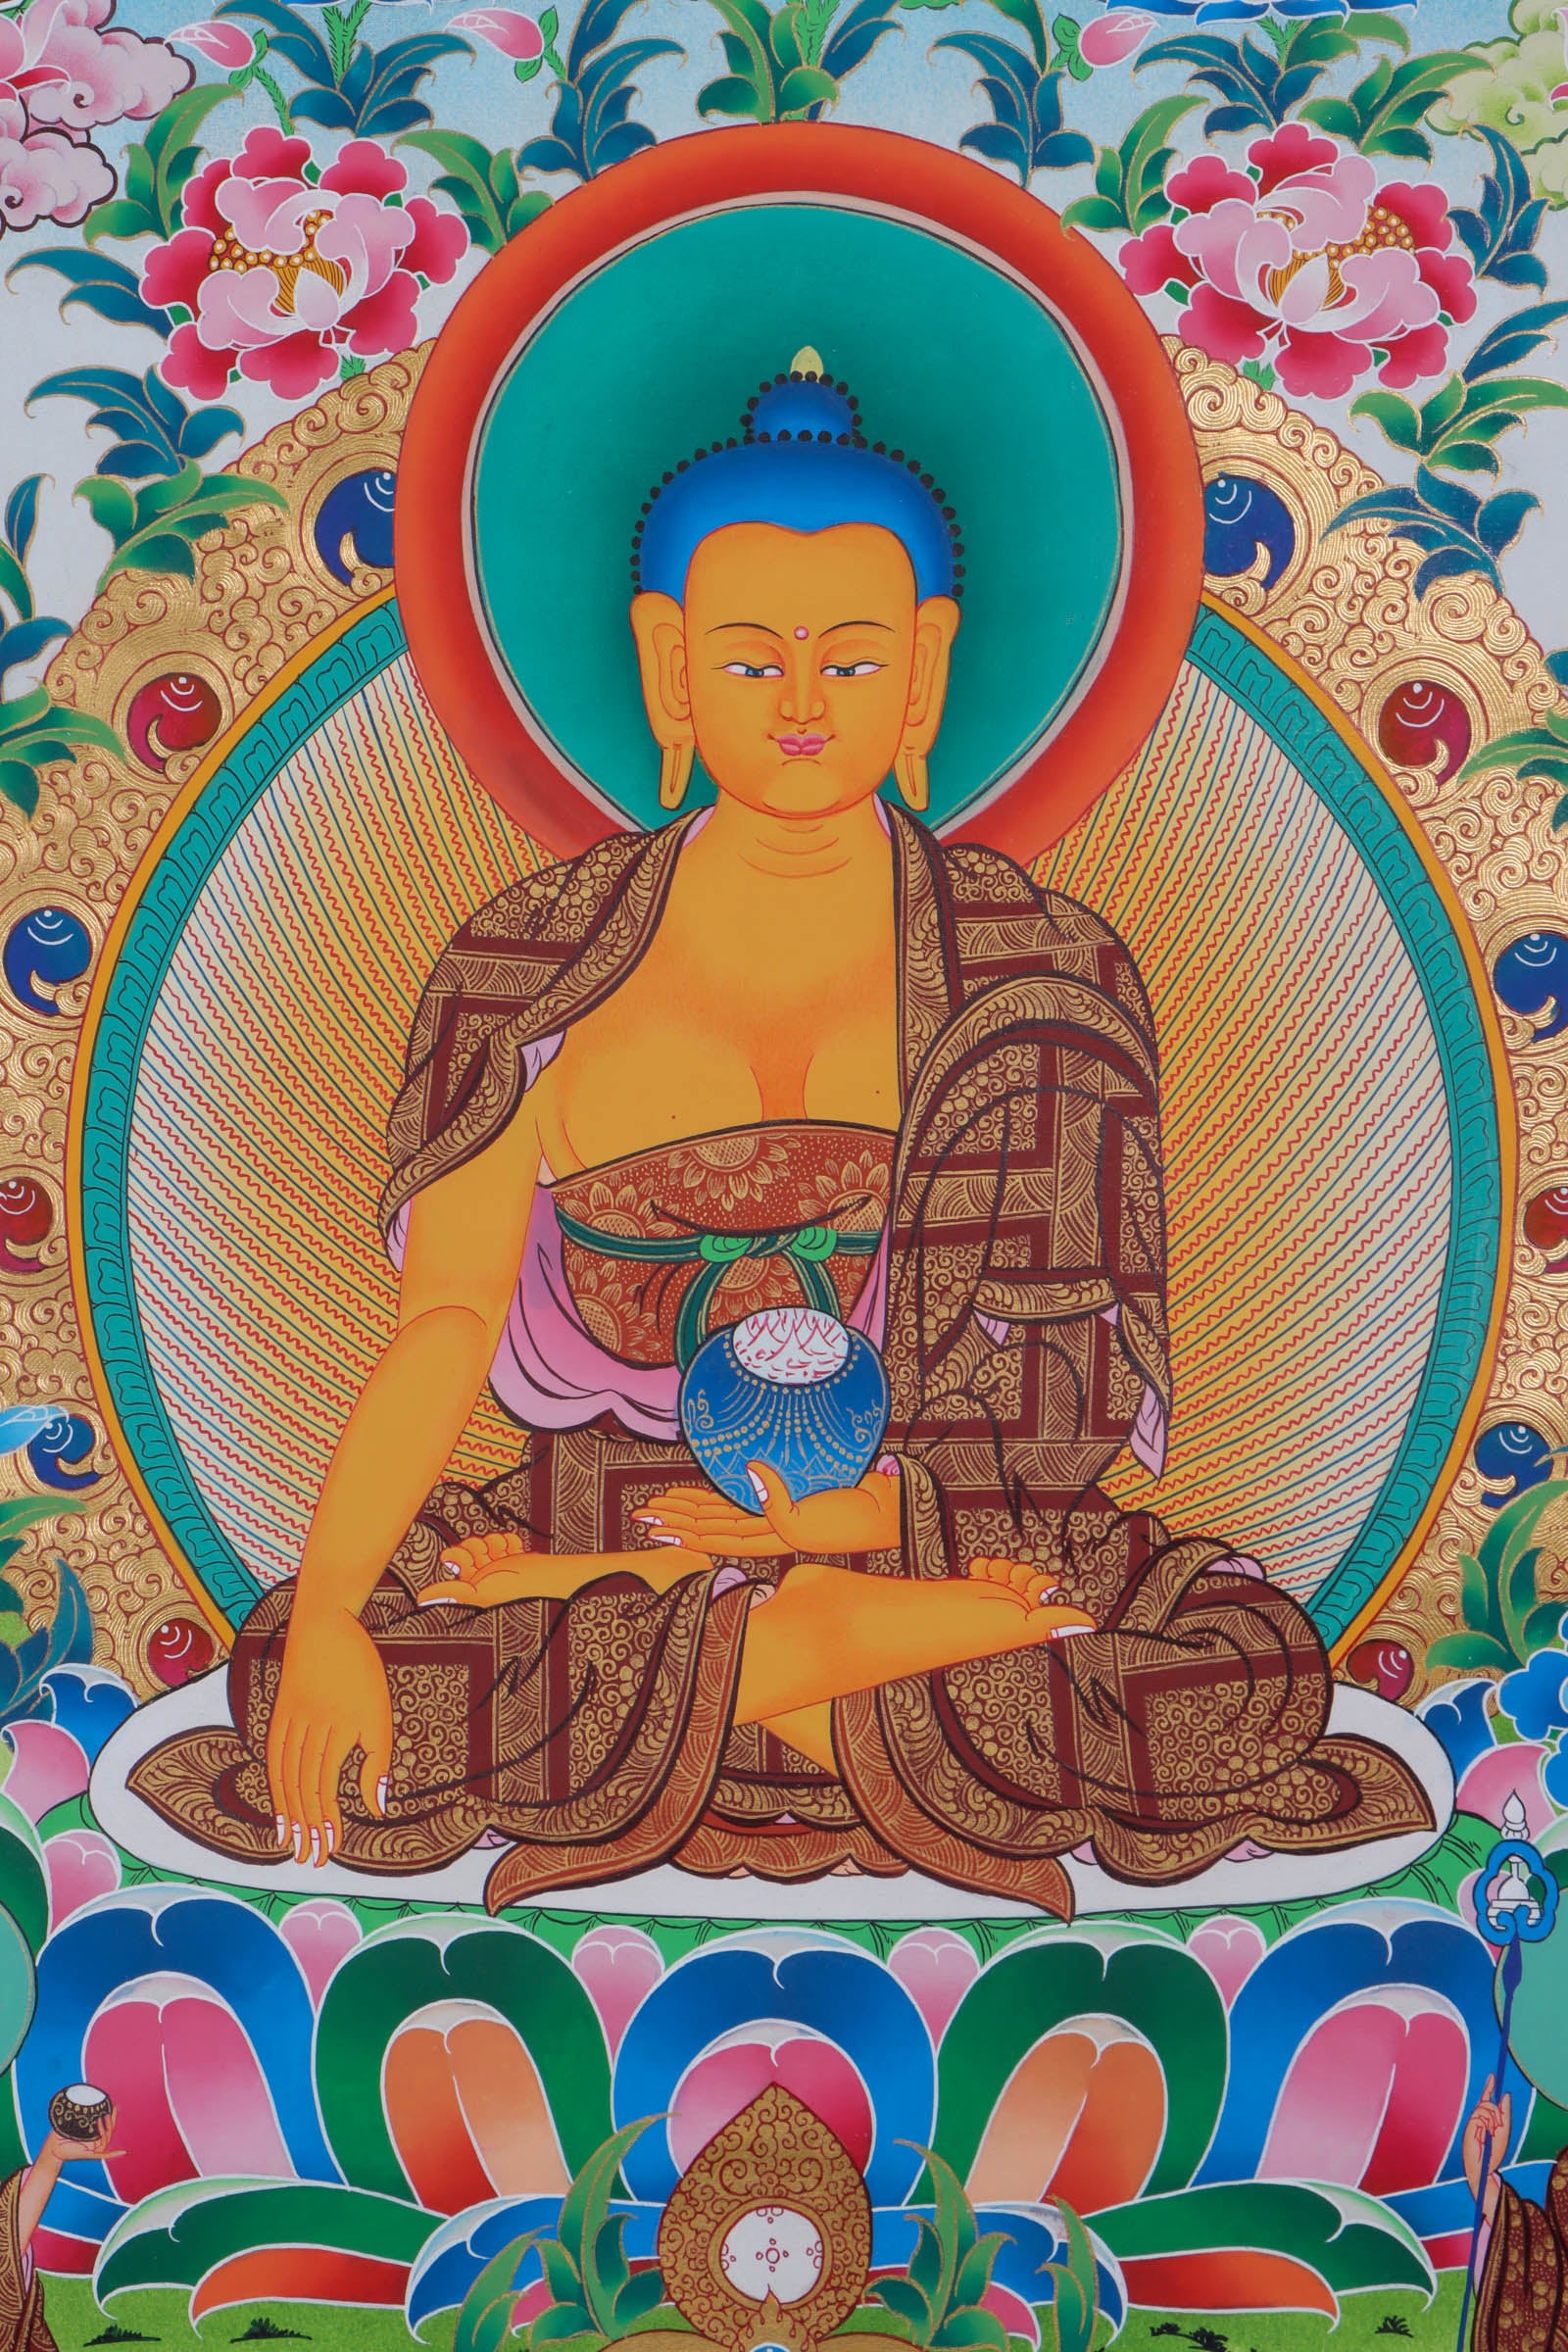 Shakymuni Buddha Thangka Art - Sha Buddha with 5 Dhyani Buddha's - Lucky Thanka